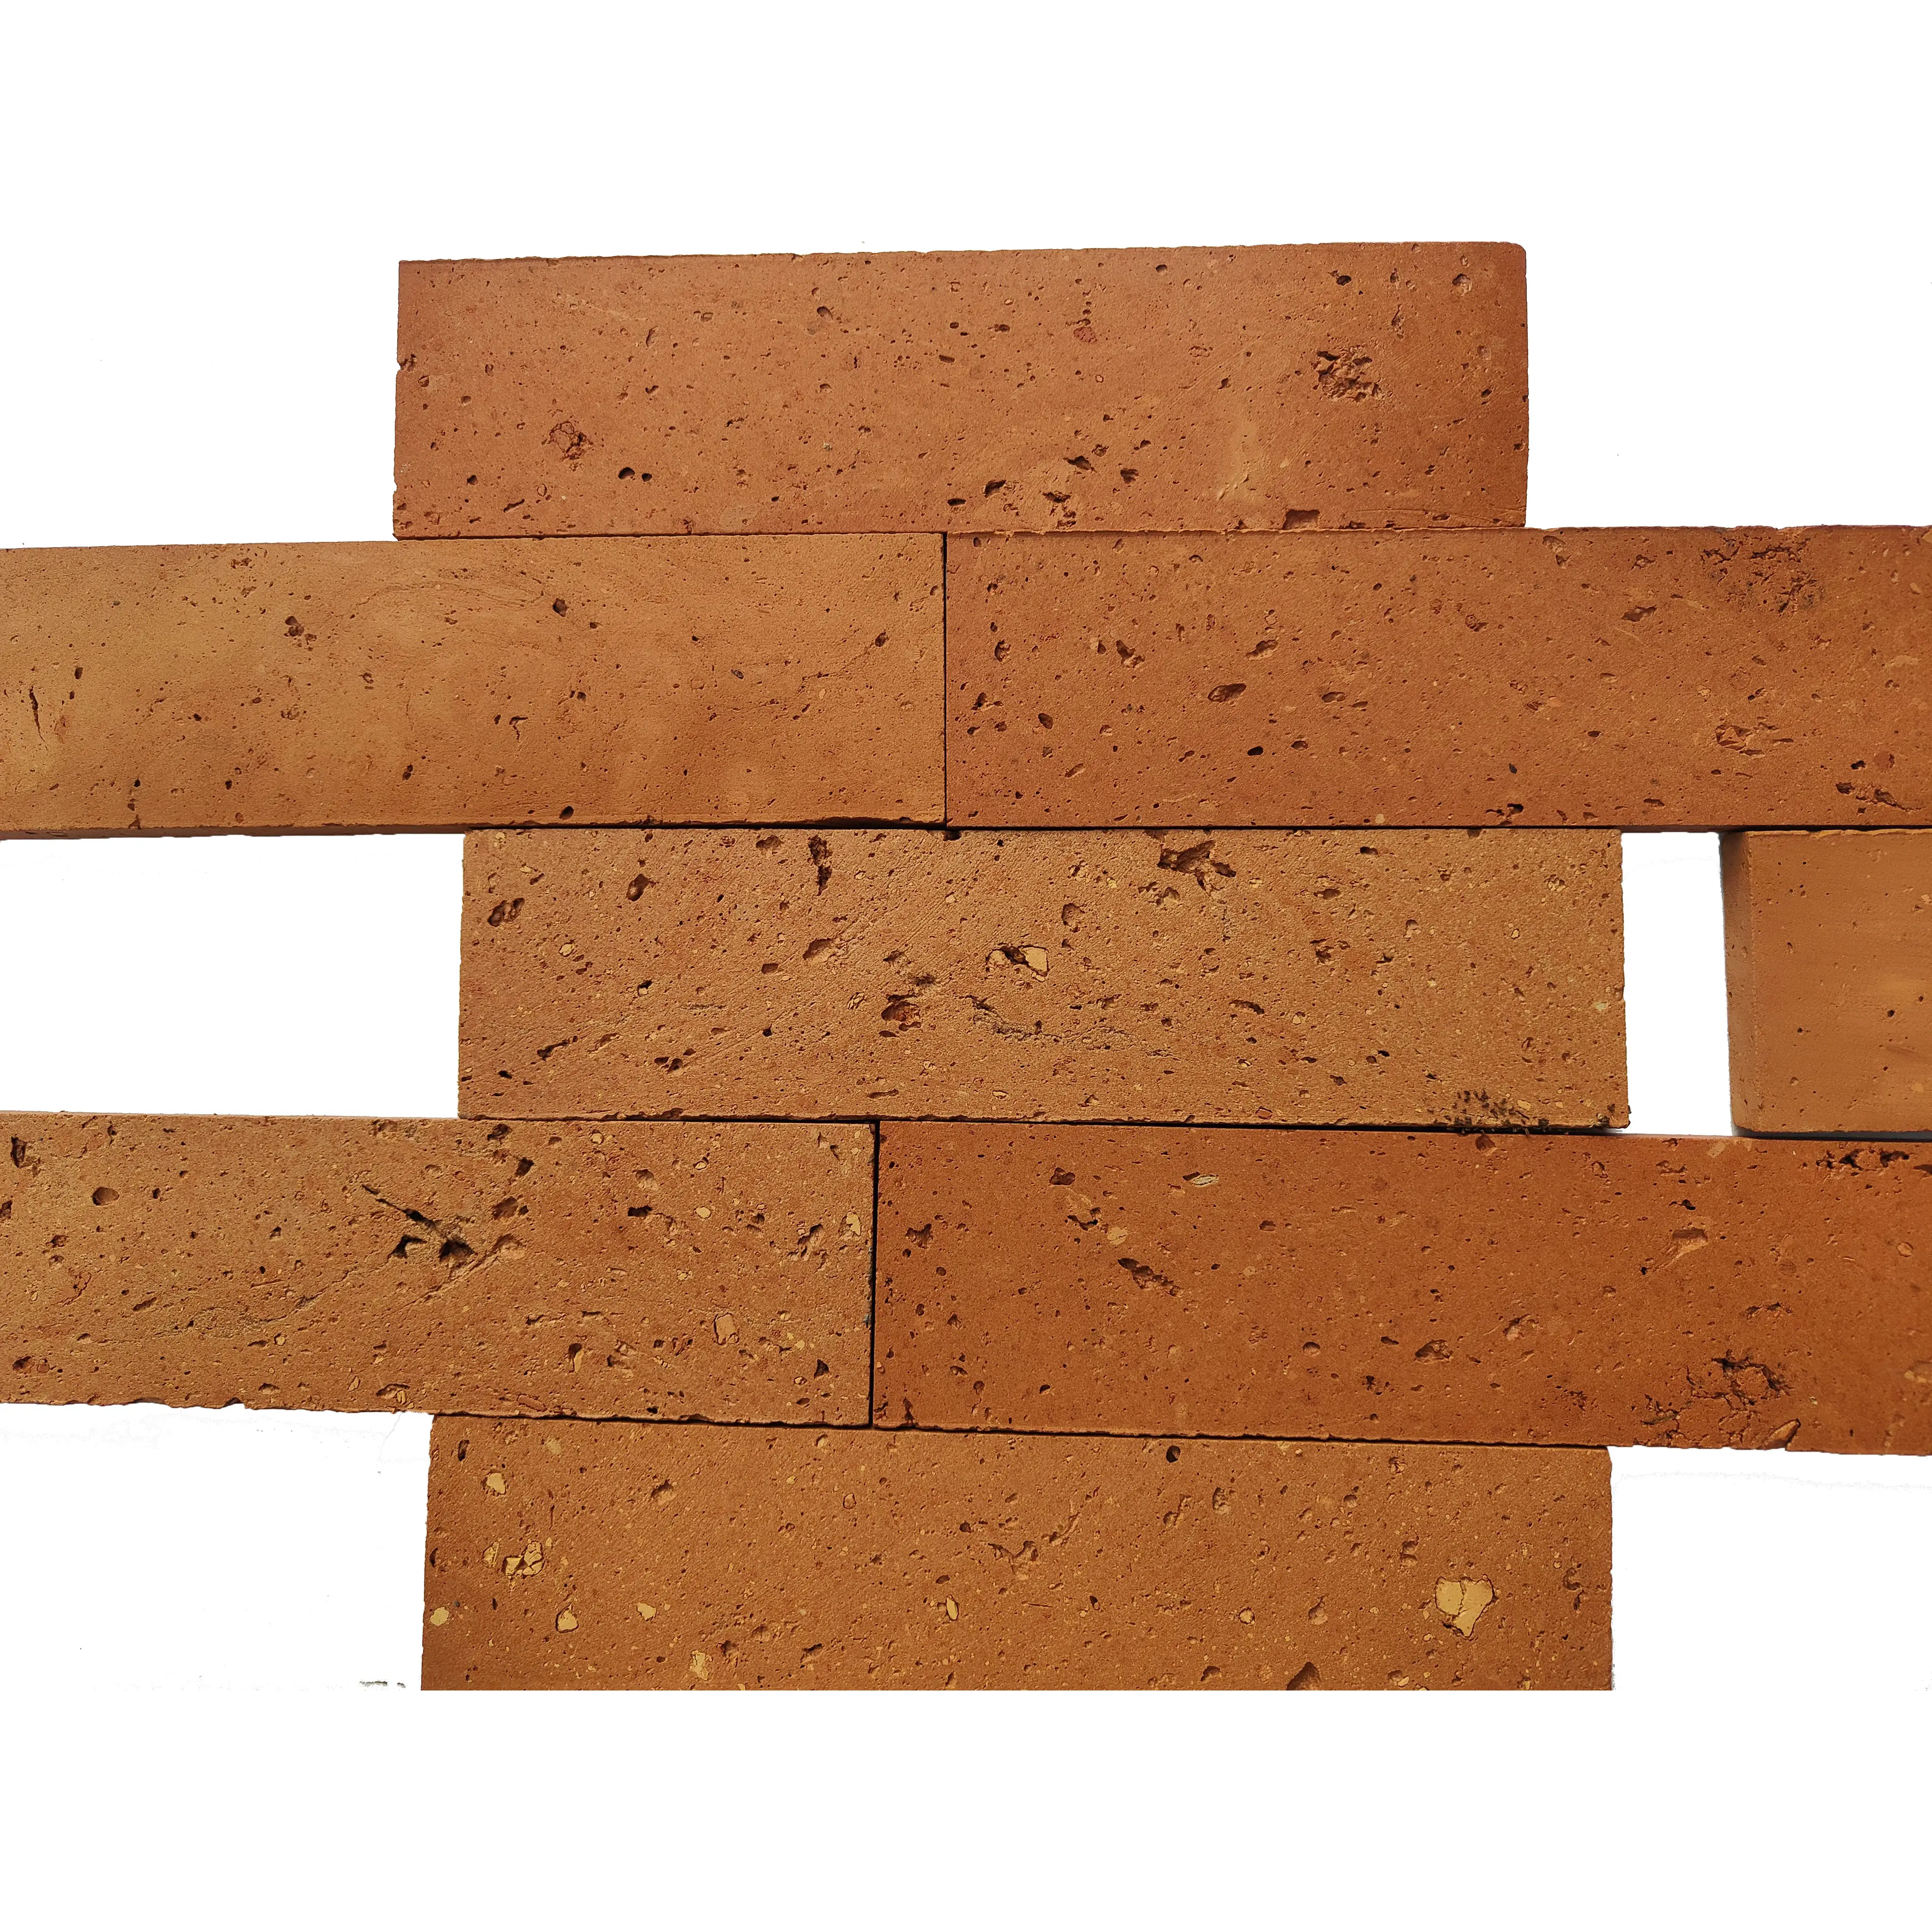 Brick factory cheap bricks used for wall decoration, polished red bricks, ancient bricks